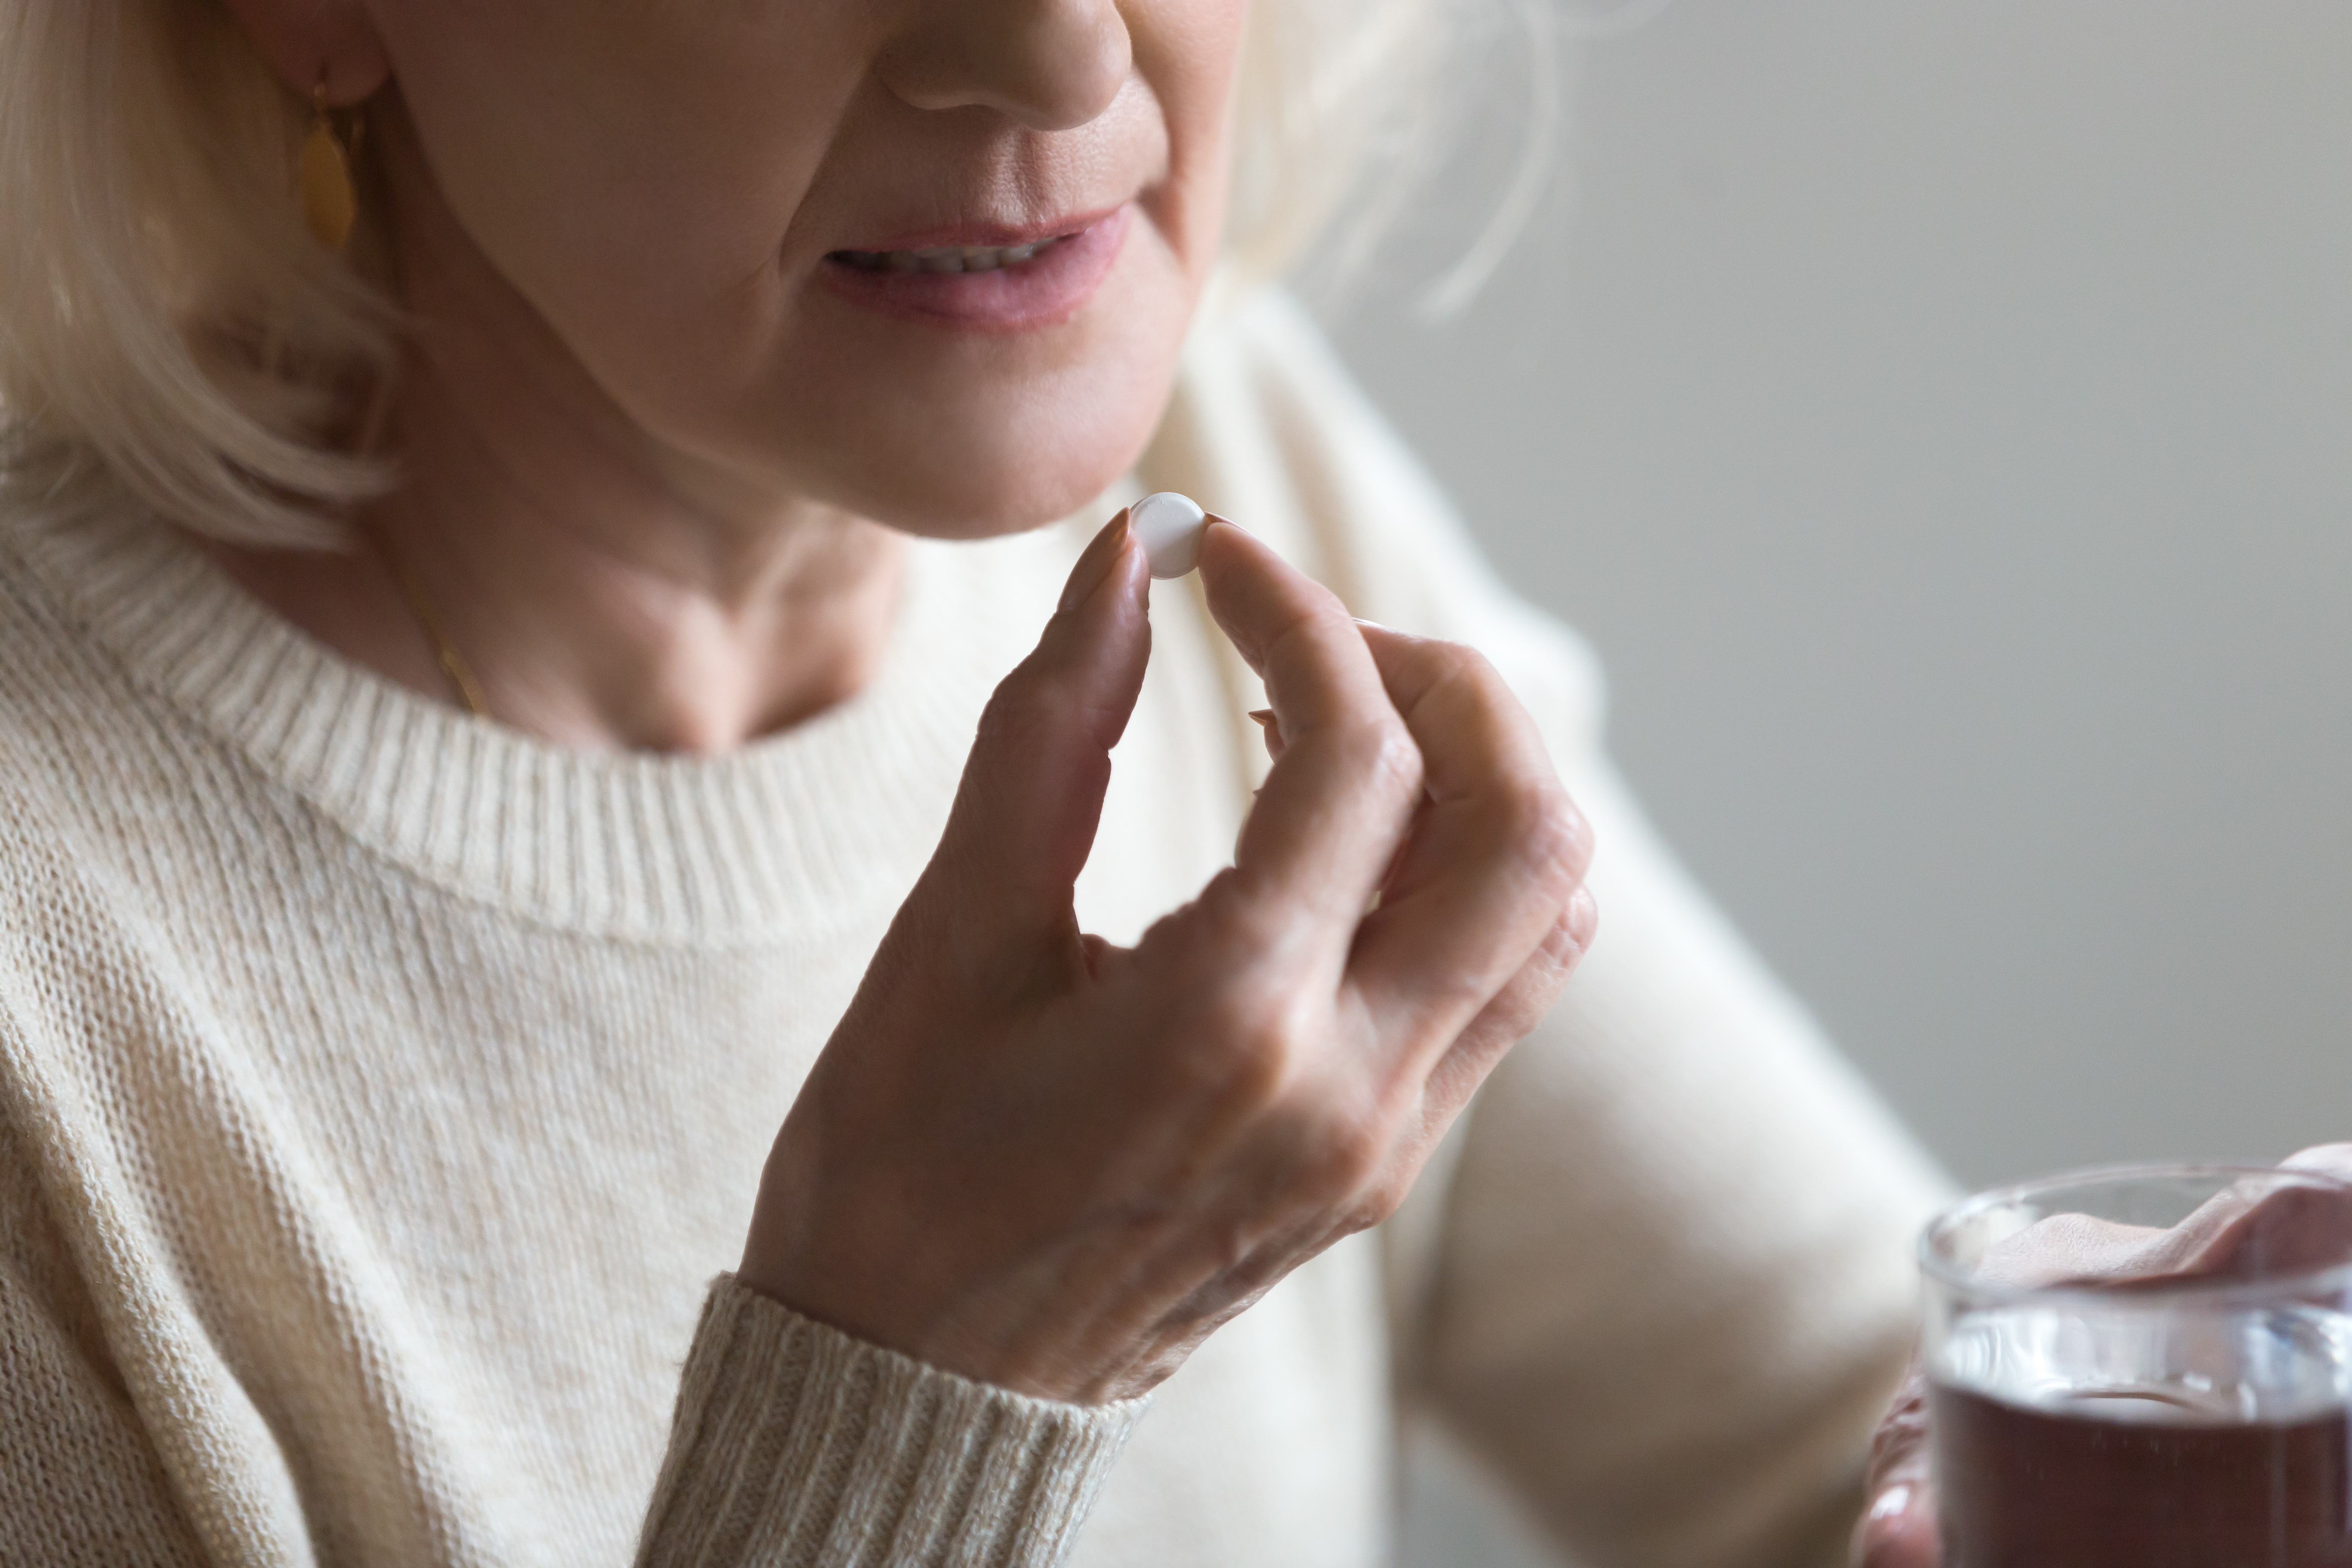 A woman takes a pill. Shutterstock image via user fizkes